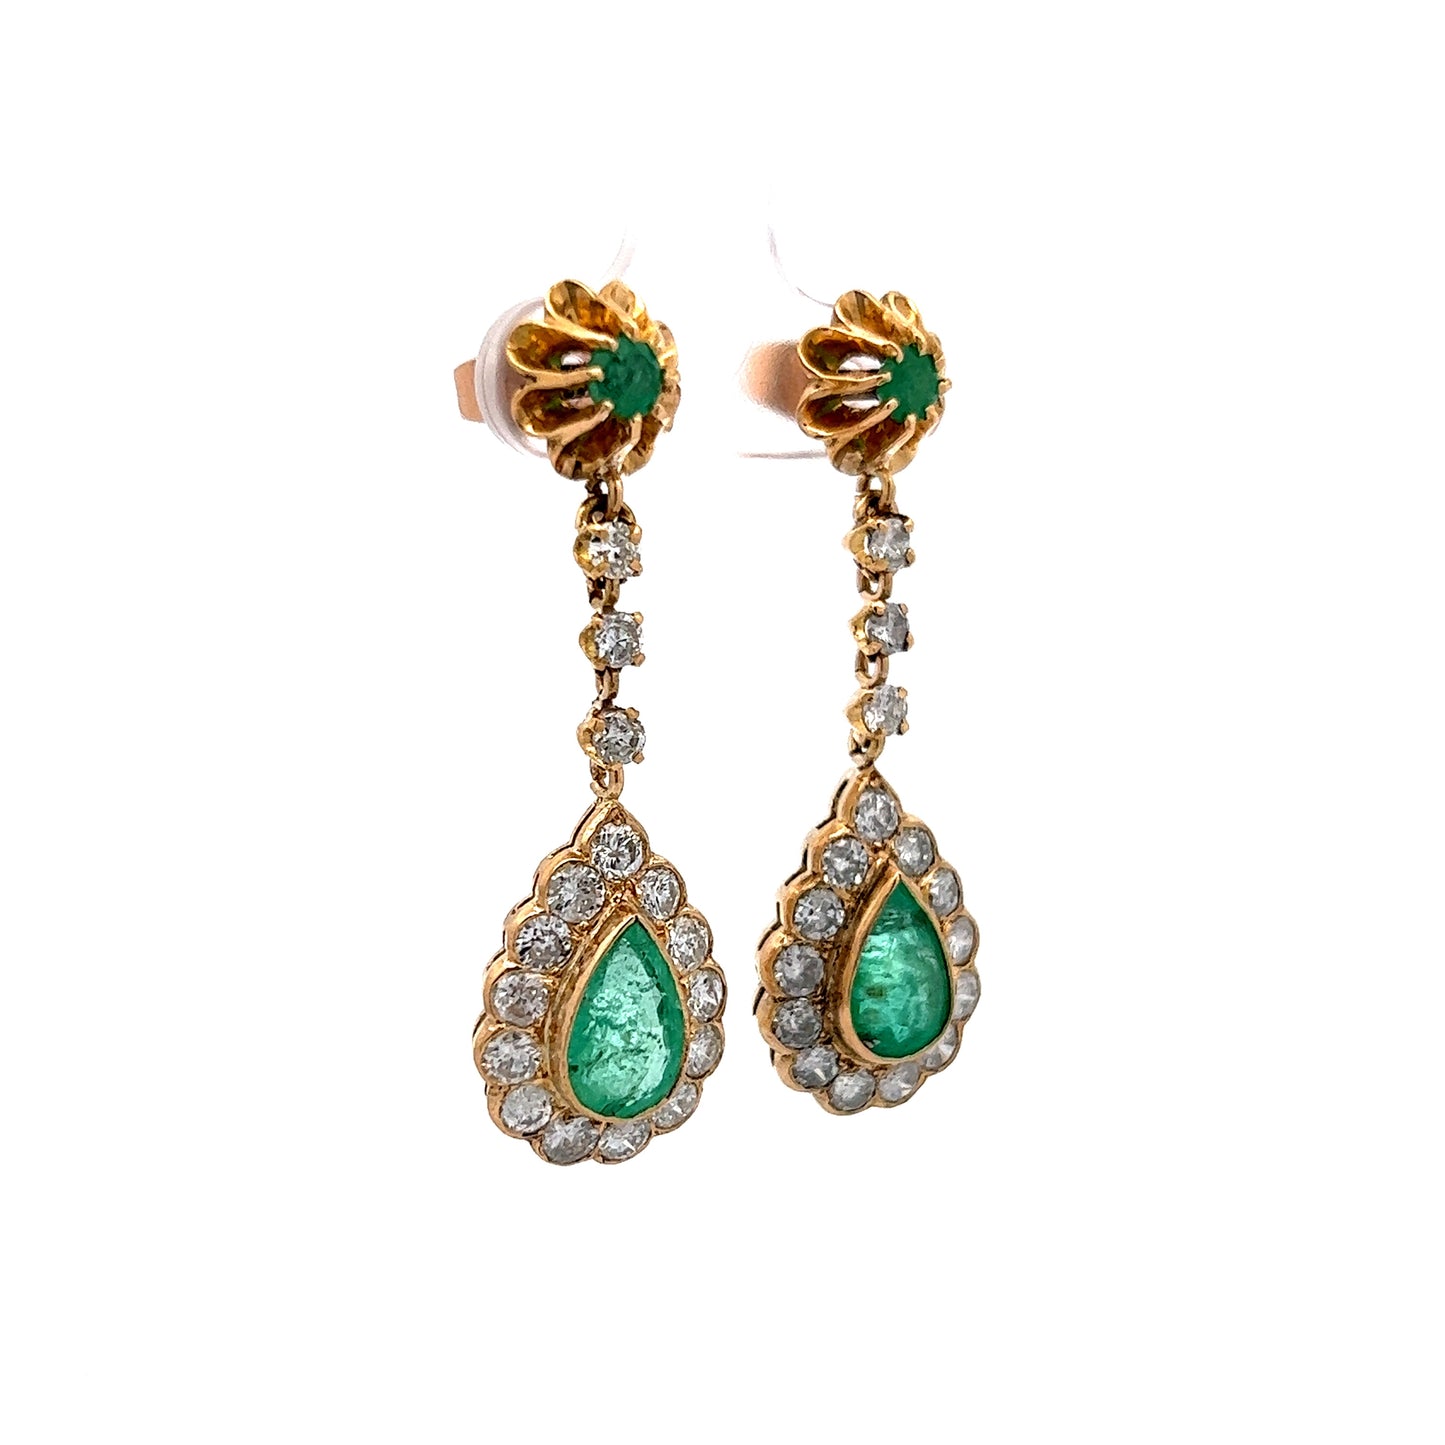 Vintage-Inspired Green Emerald & Diamond Drop Earrings in 14K Yellow Gold